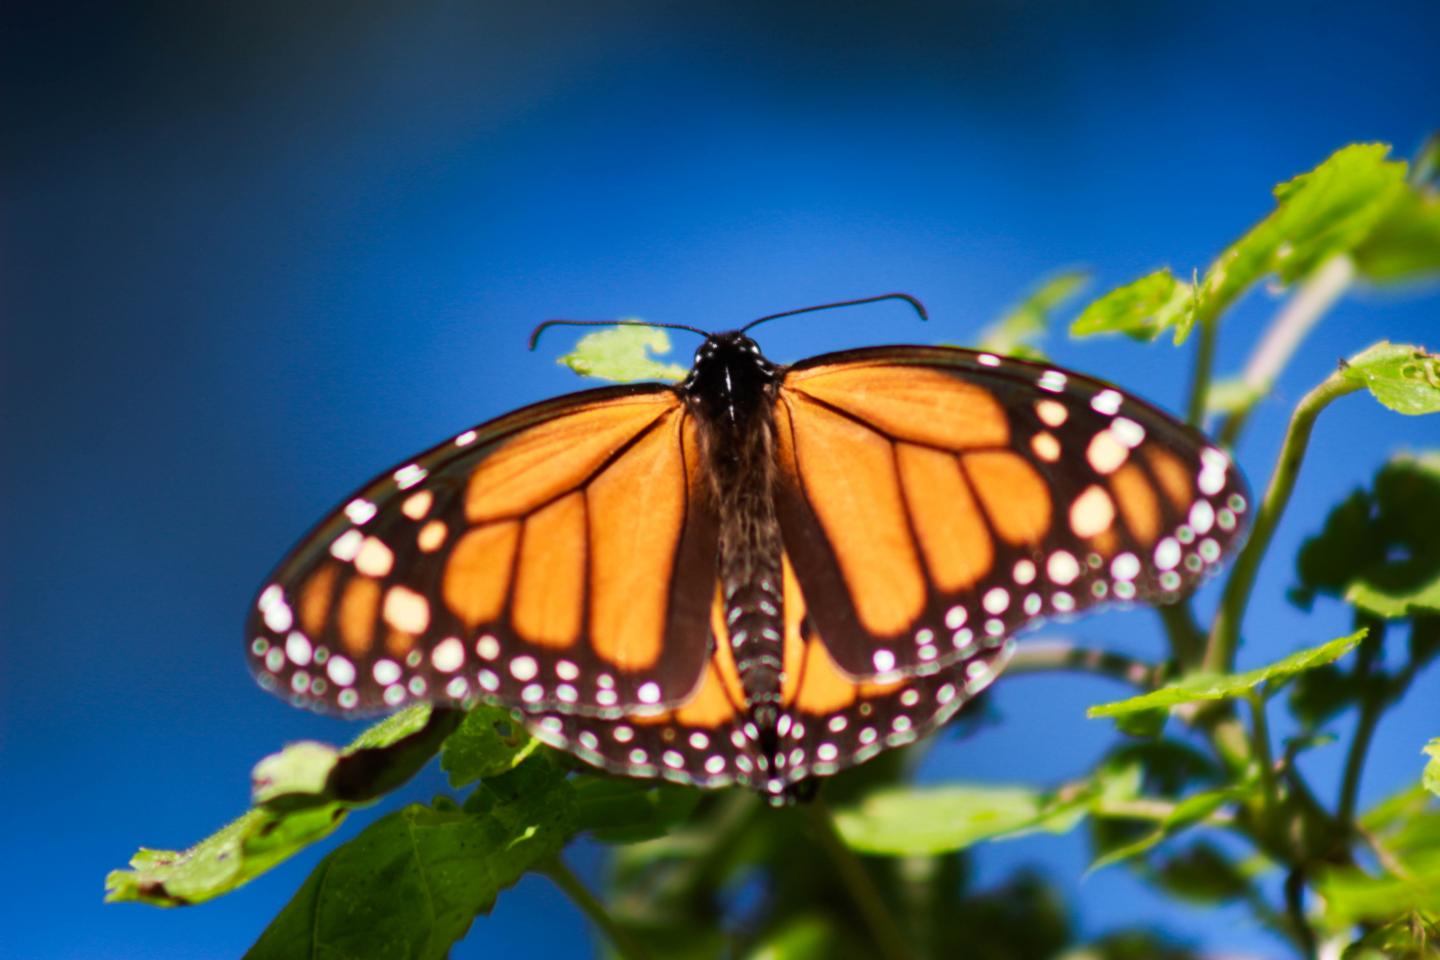 To save monarch butterflies, we need more milkweed